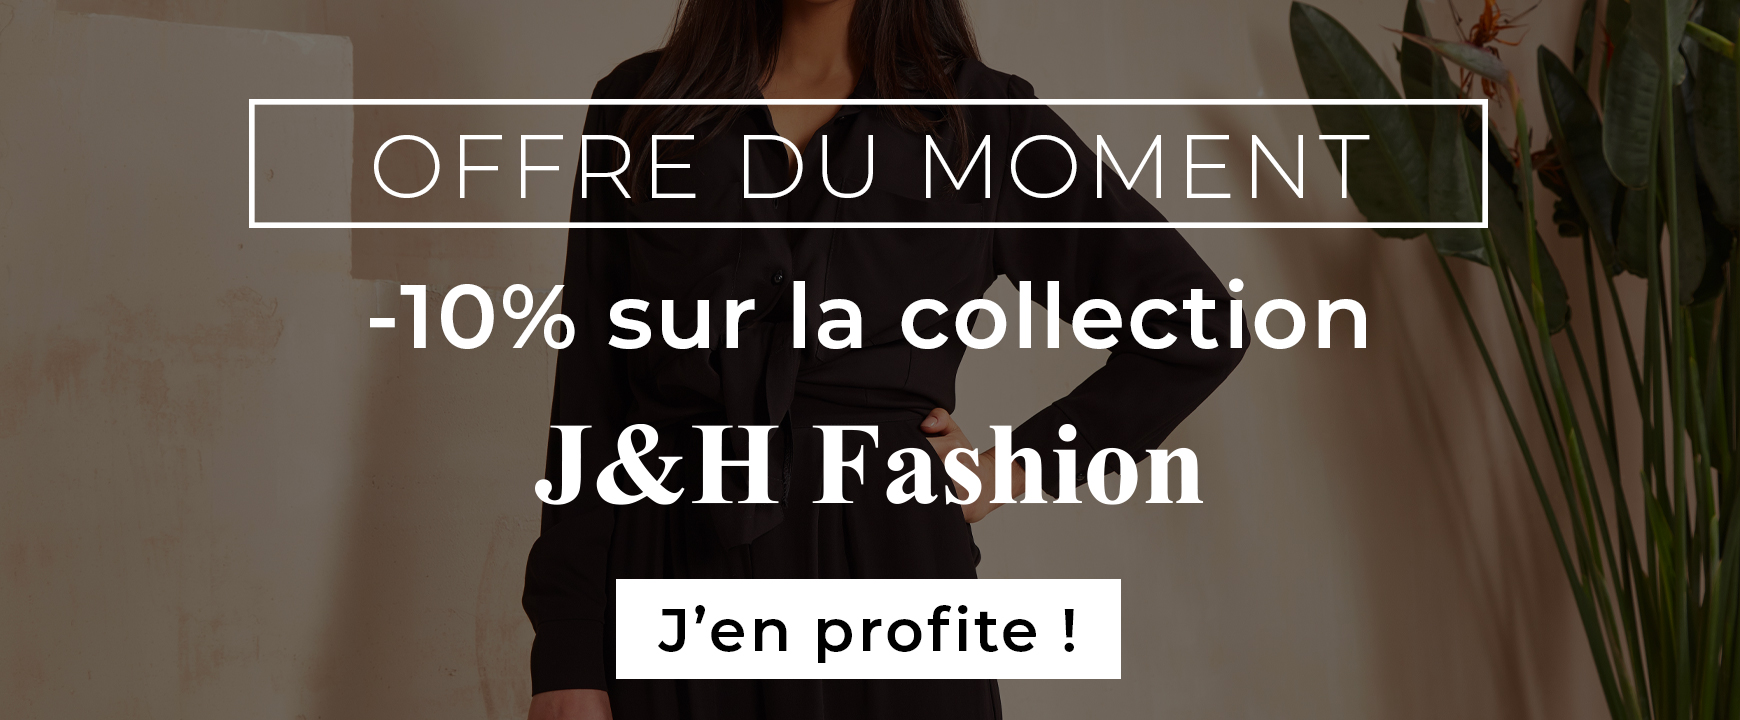 Grossiste en ligne J&H Fashion - Offre du moment